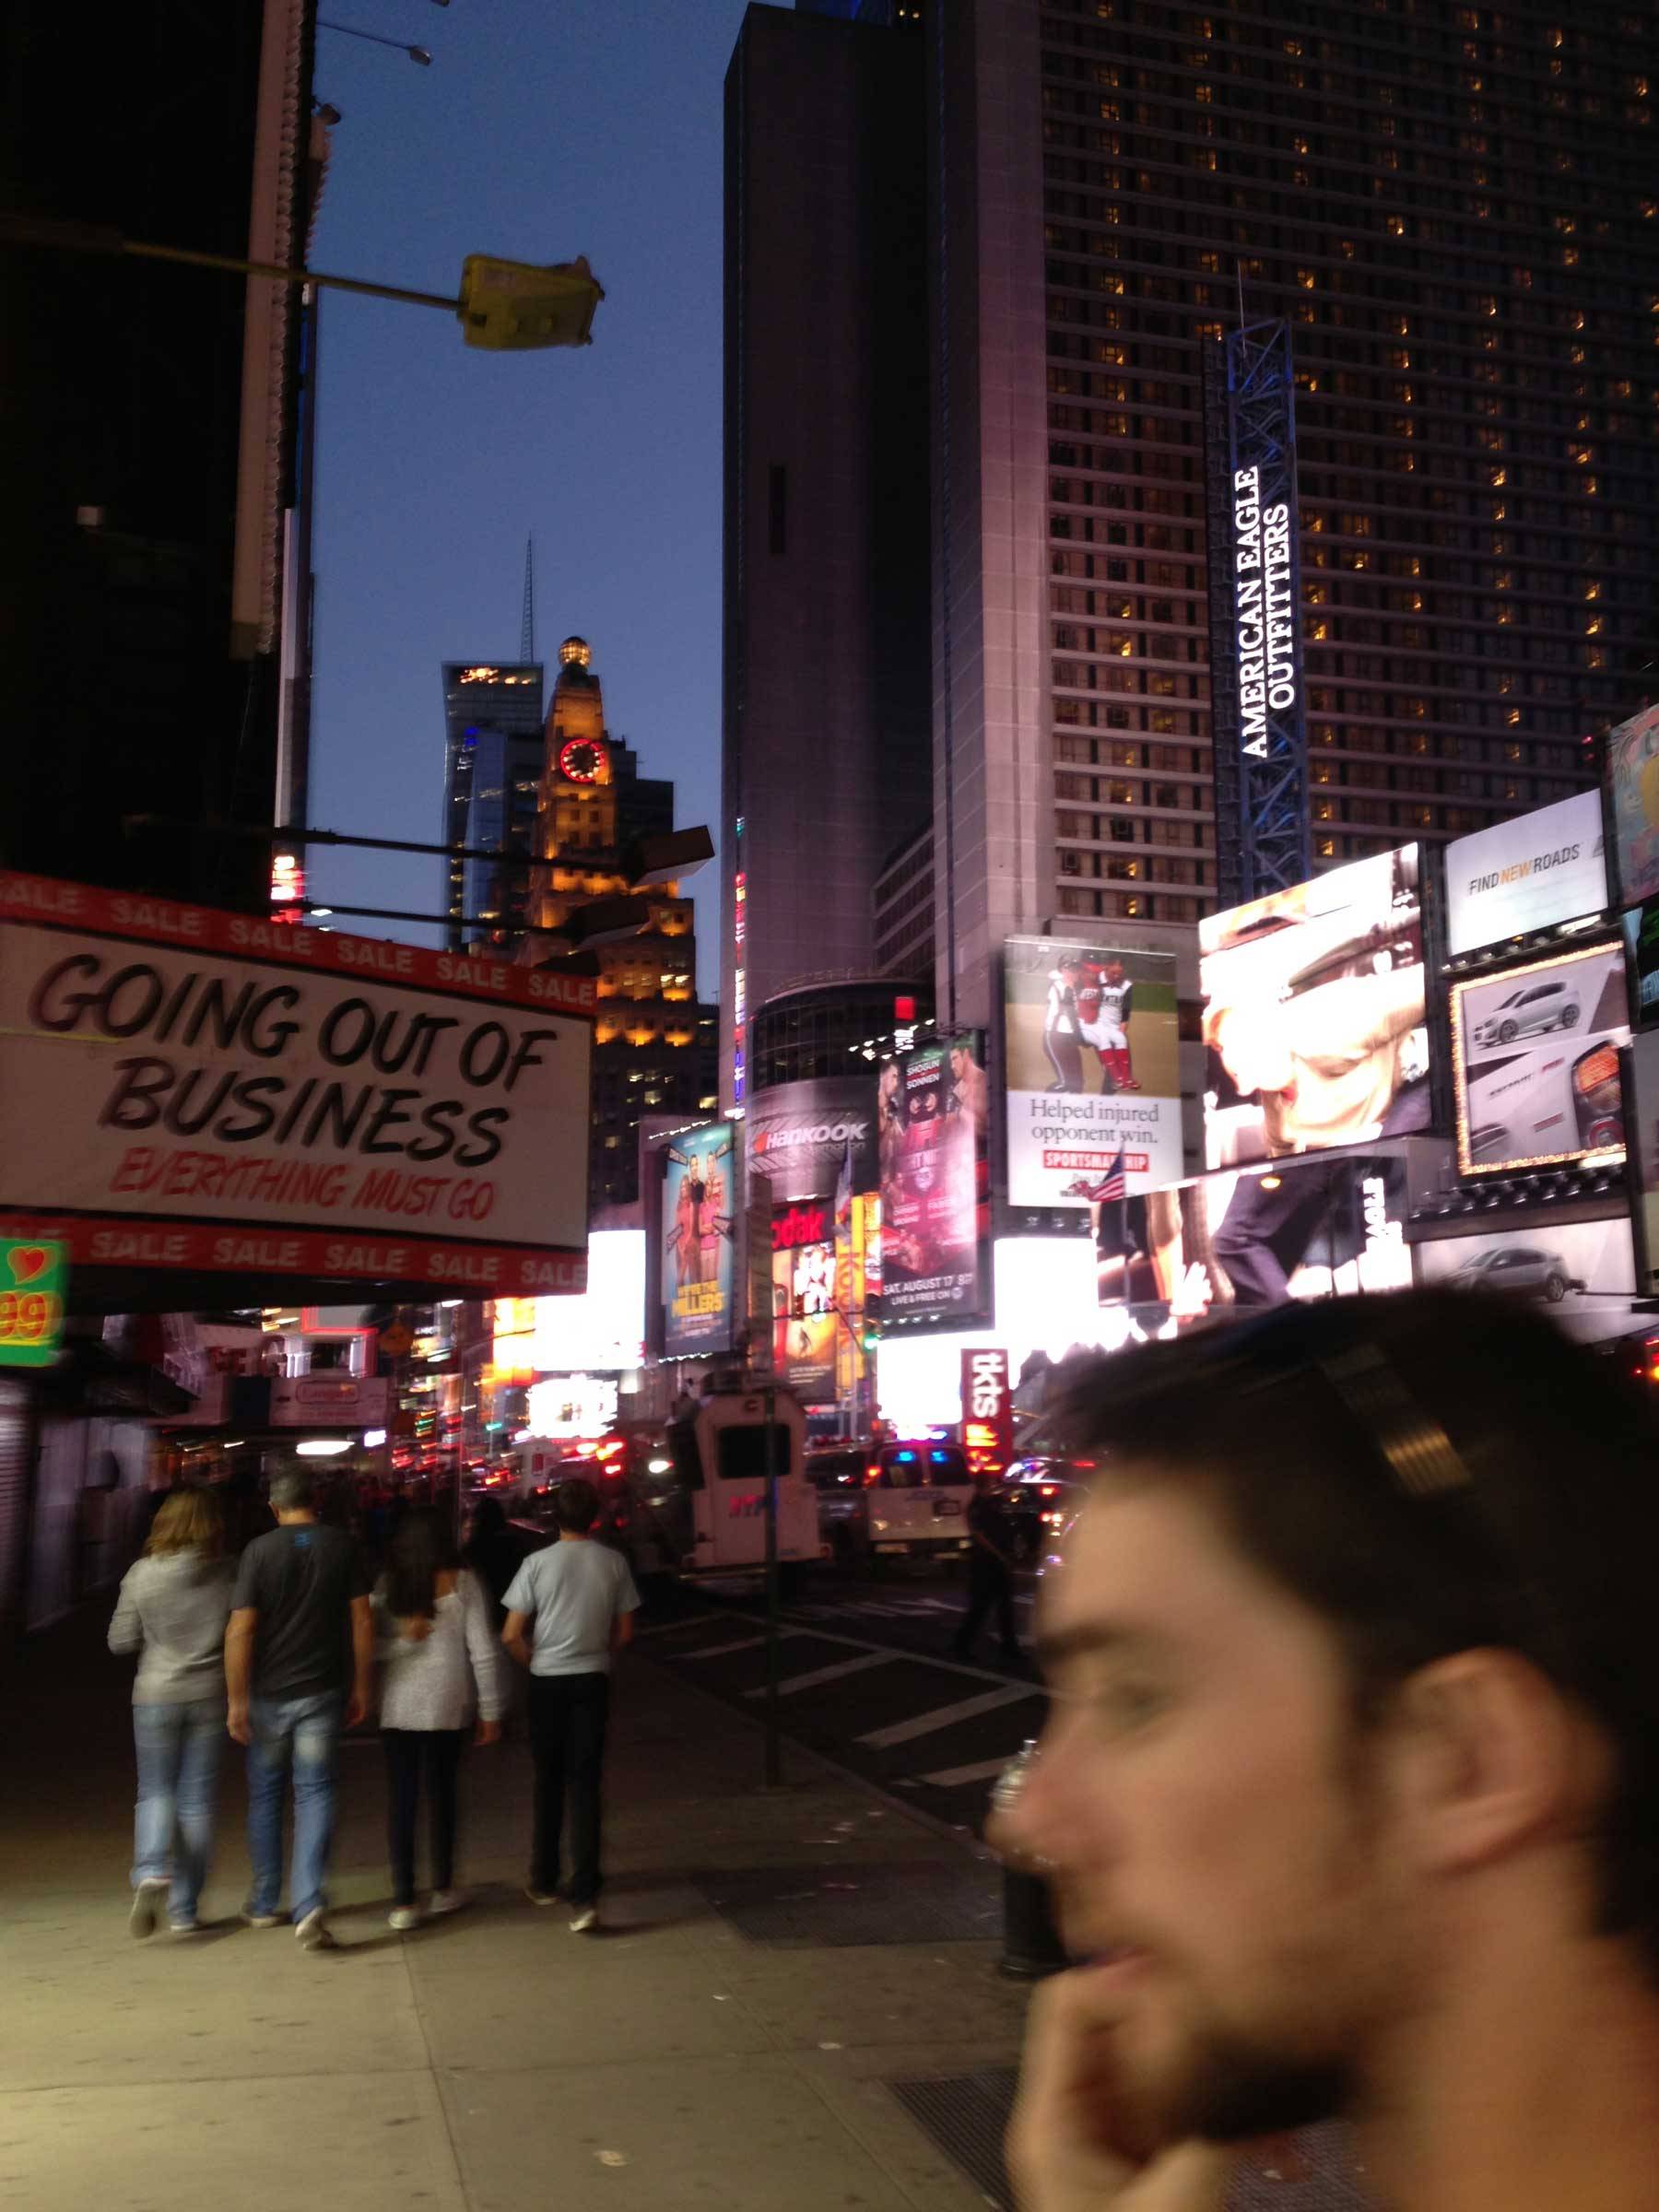 Jared walking down Times Square